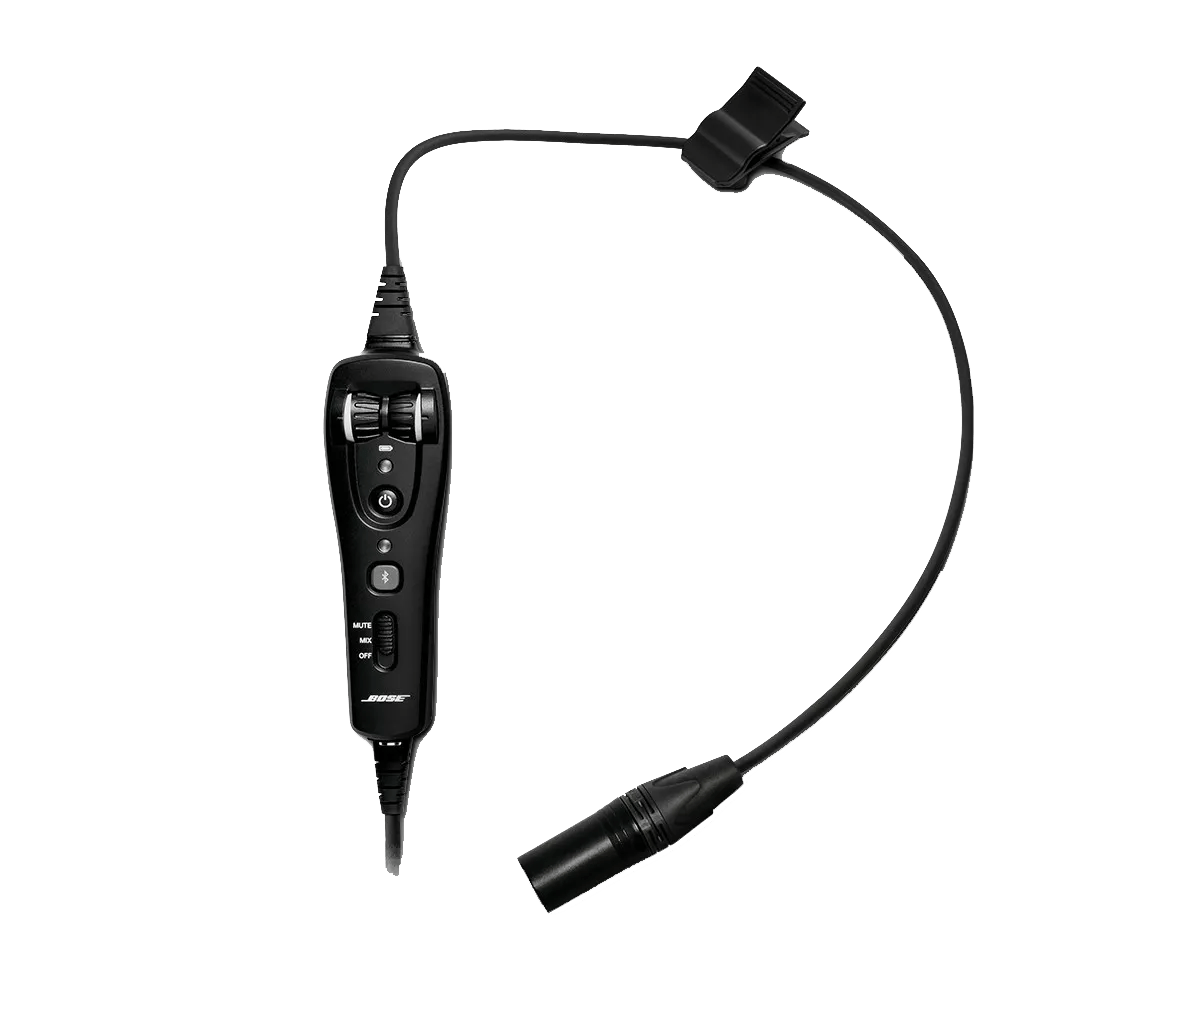 A20 Headset Cable - XLR Plug